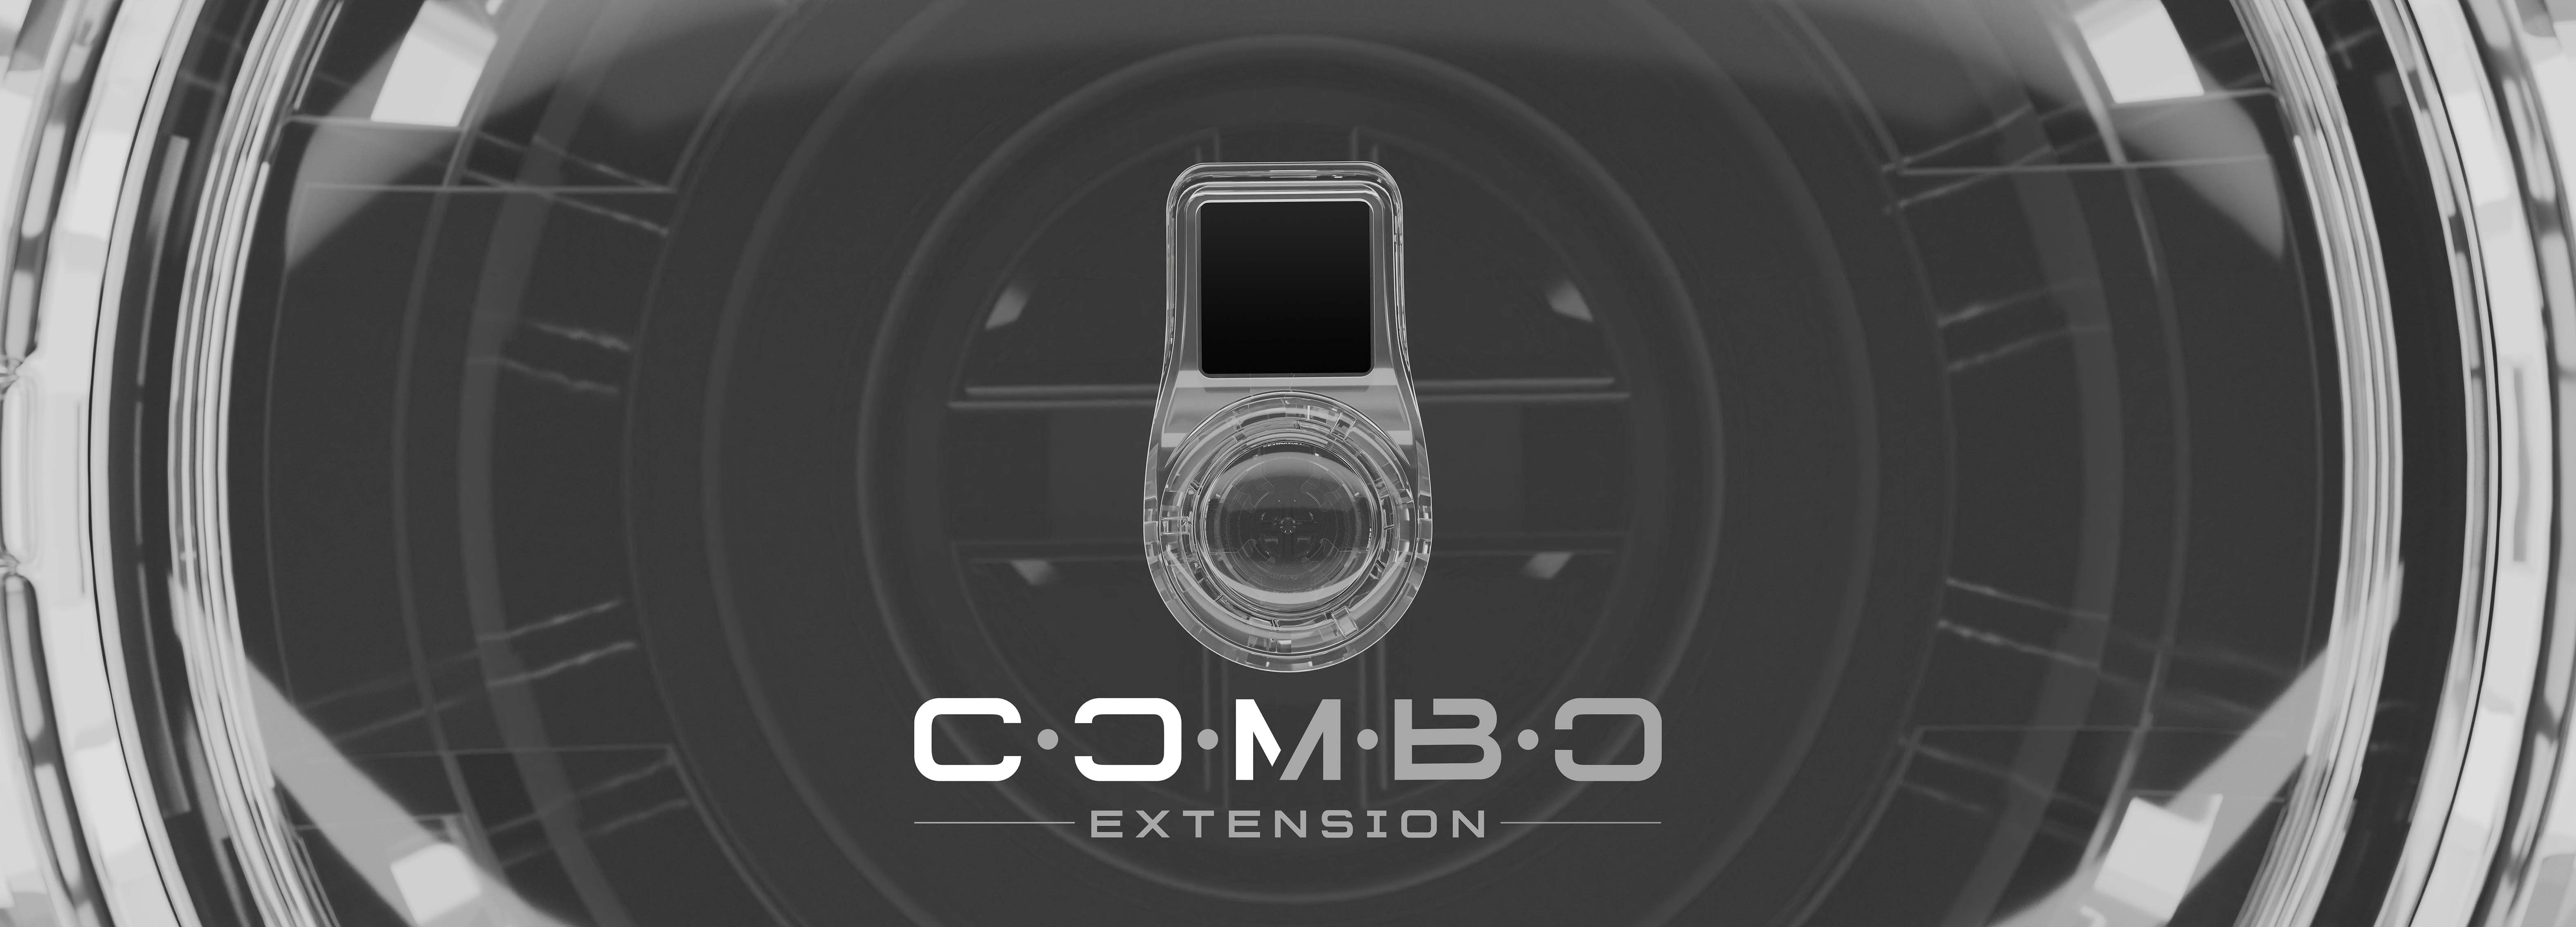 C.O.M.B.O. Extension